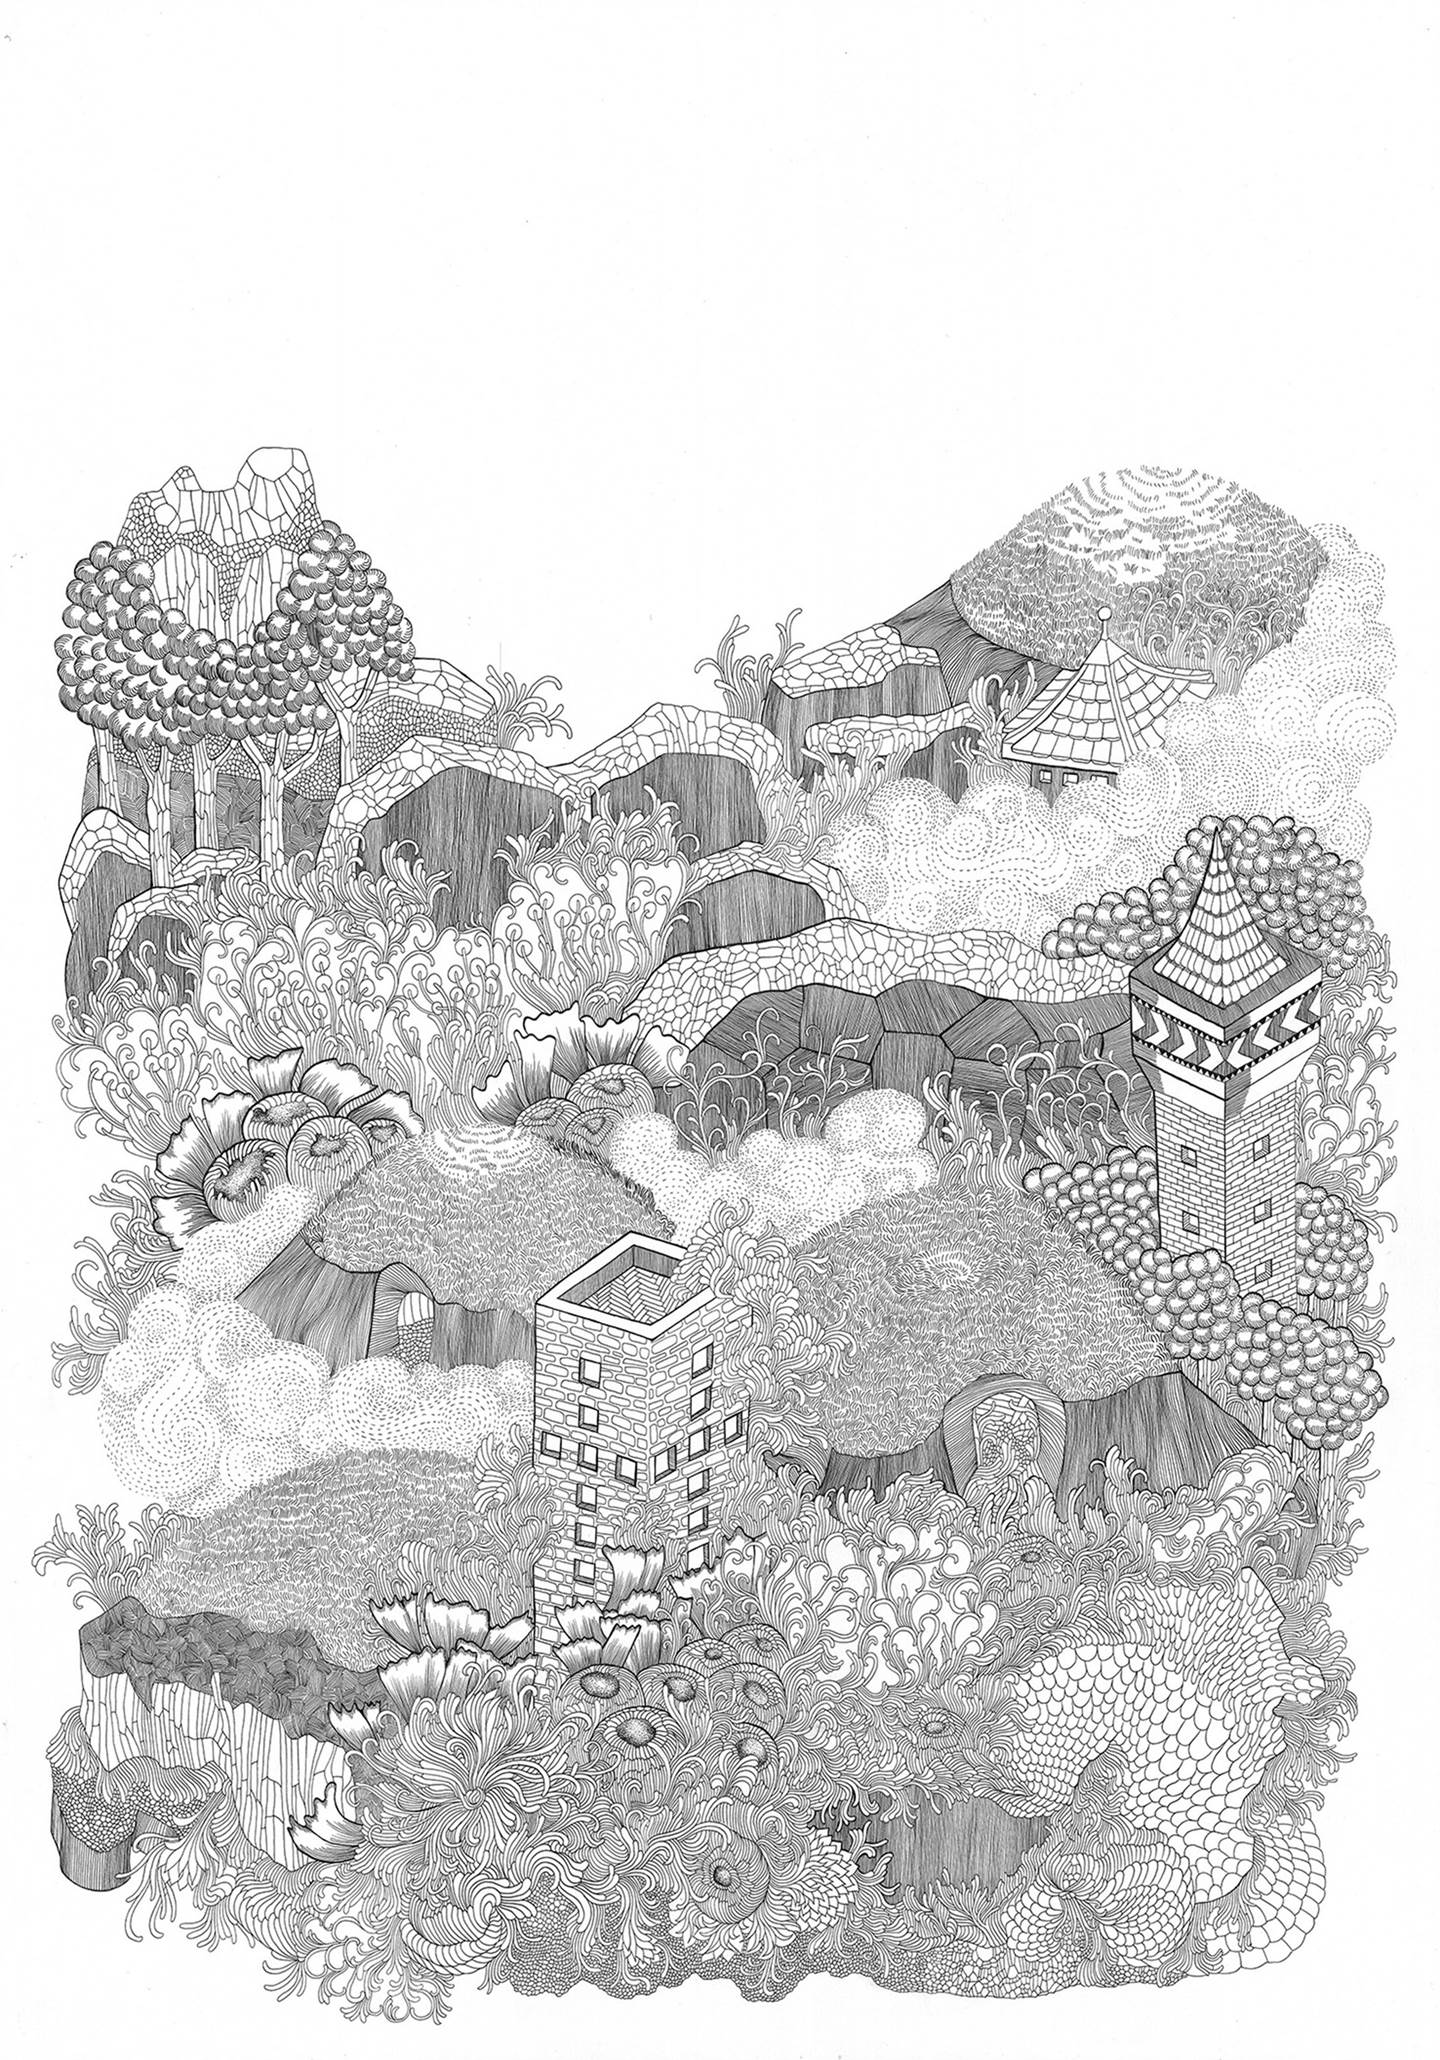 Atlantis #4, original   Dessin et illustration par Anne Pangolin Guéno